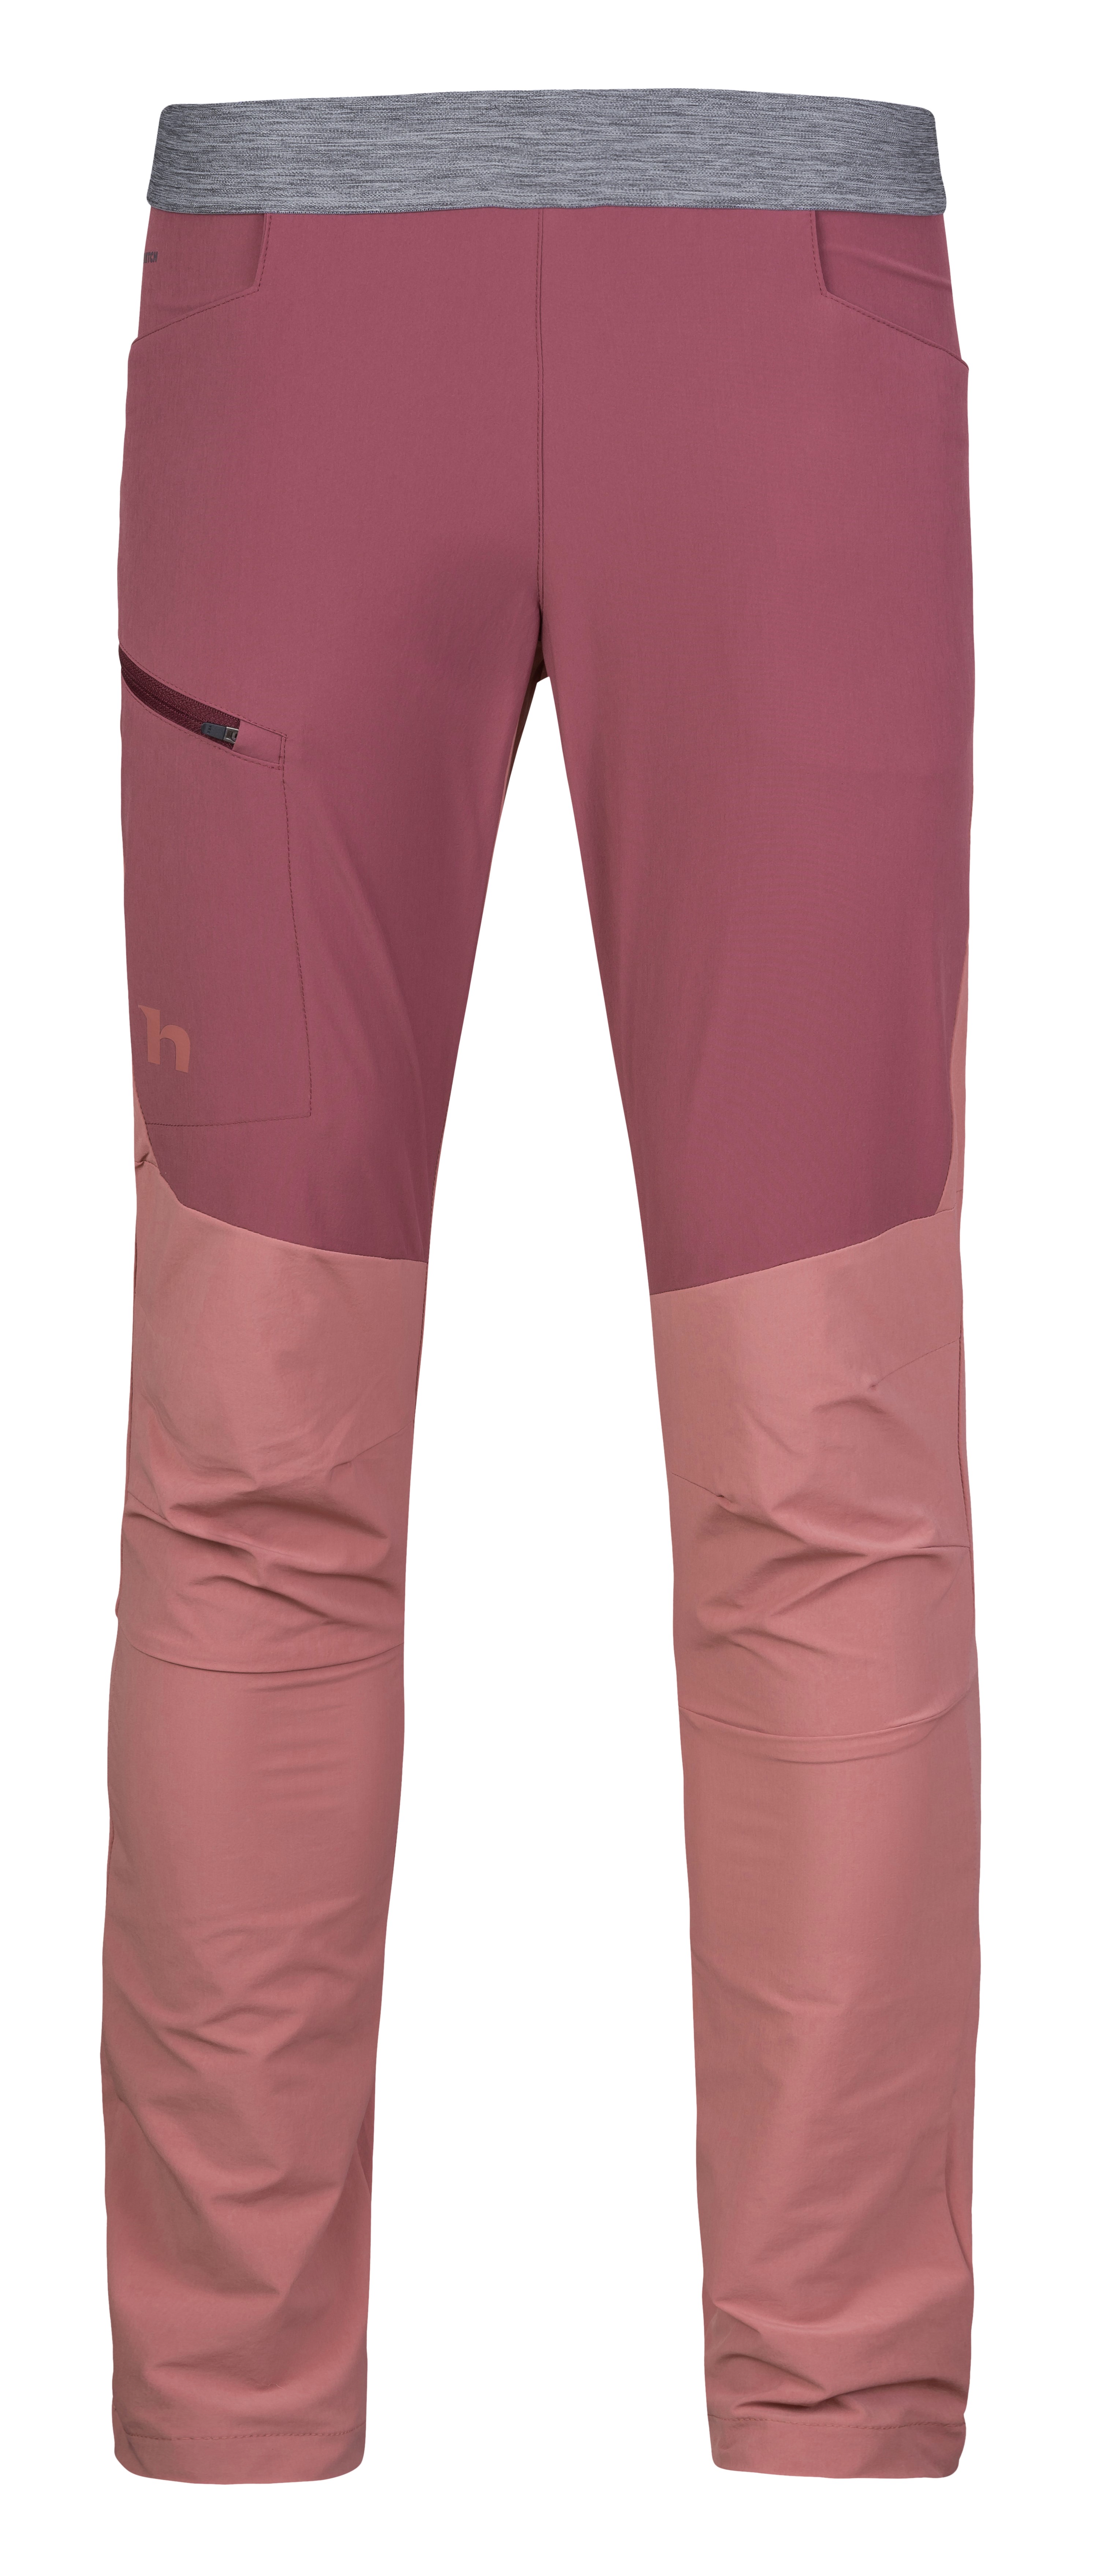 Hannah TORRENT W canyon rose/roan rouge Velikost: 36 dámské kalhoty